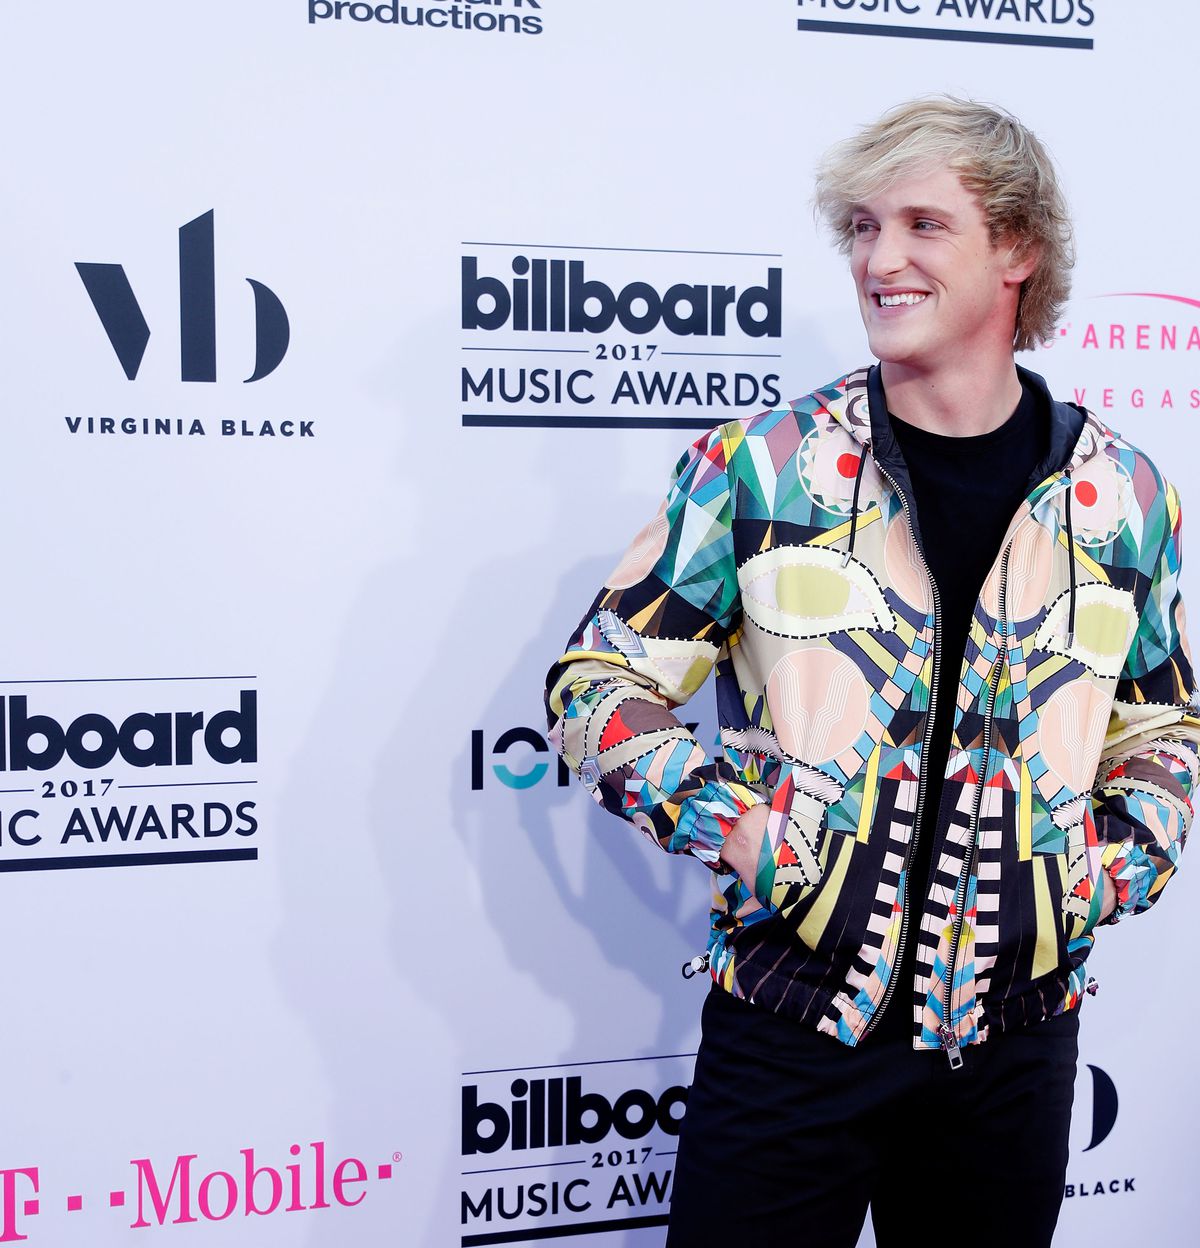 2017 Billboard Music Awards Presented by Virginia Black - Red Carpet